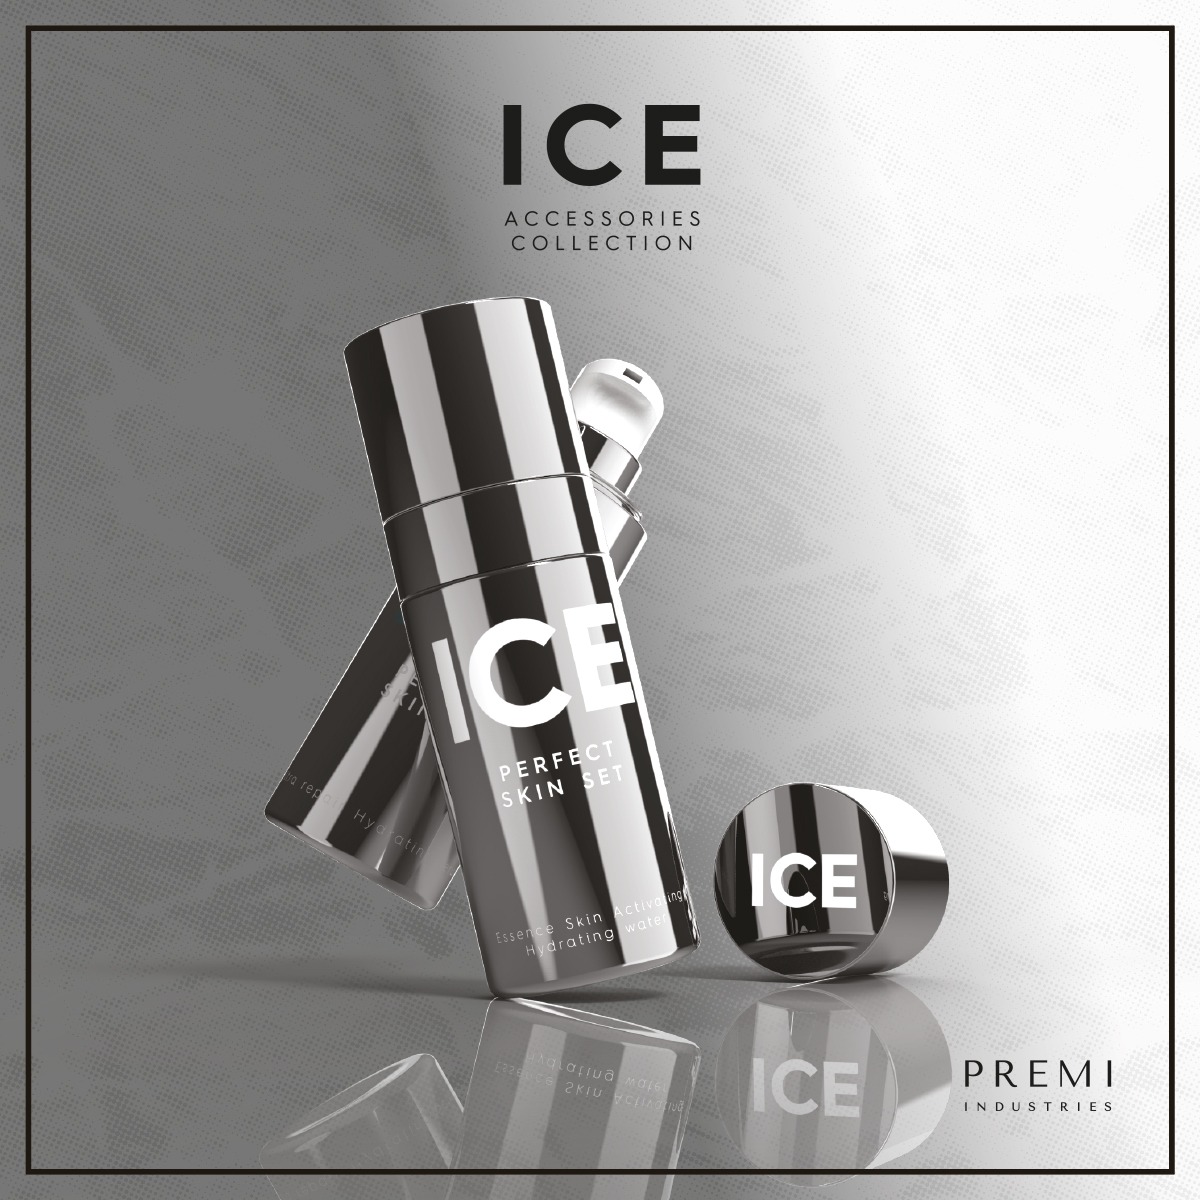 01-ICE-ACCESSORIES.jpg